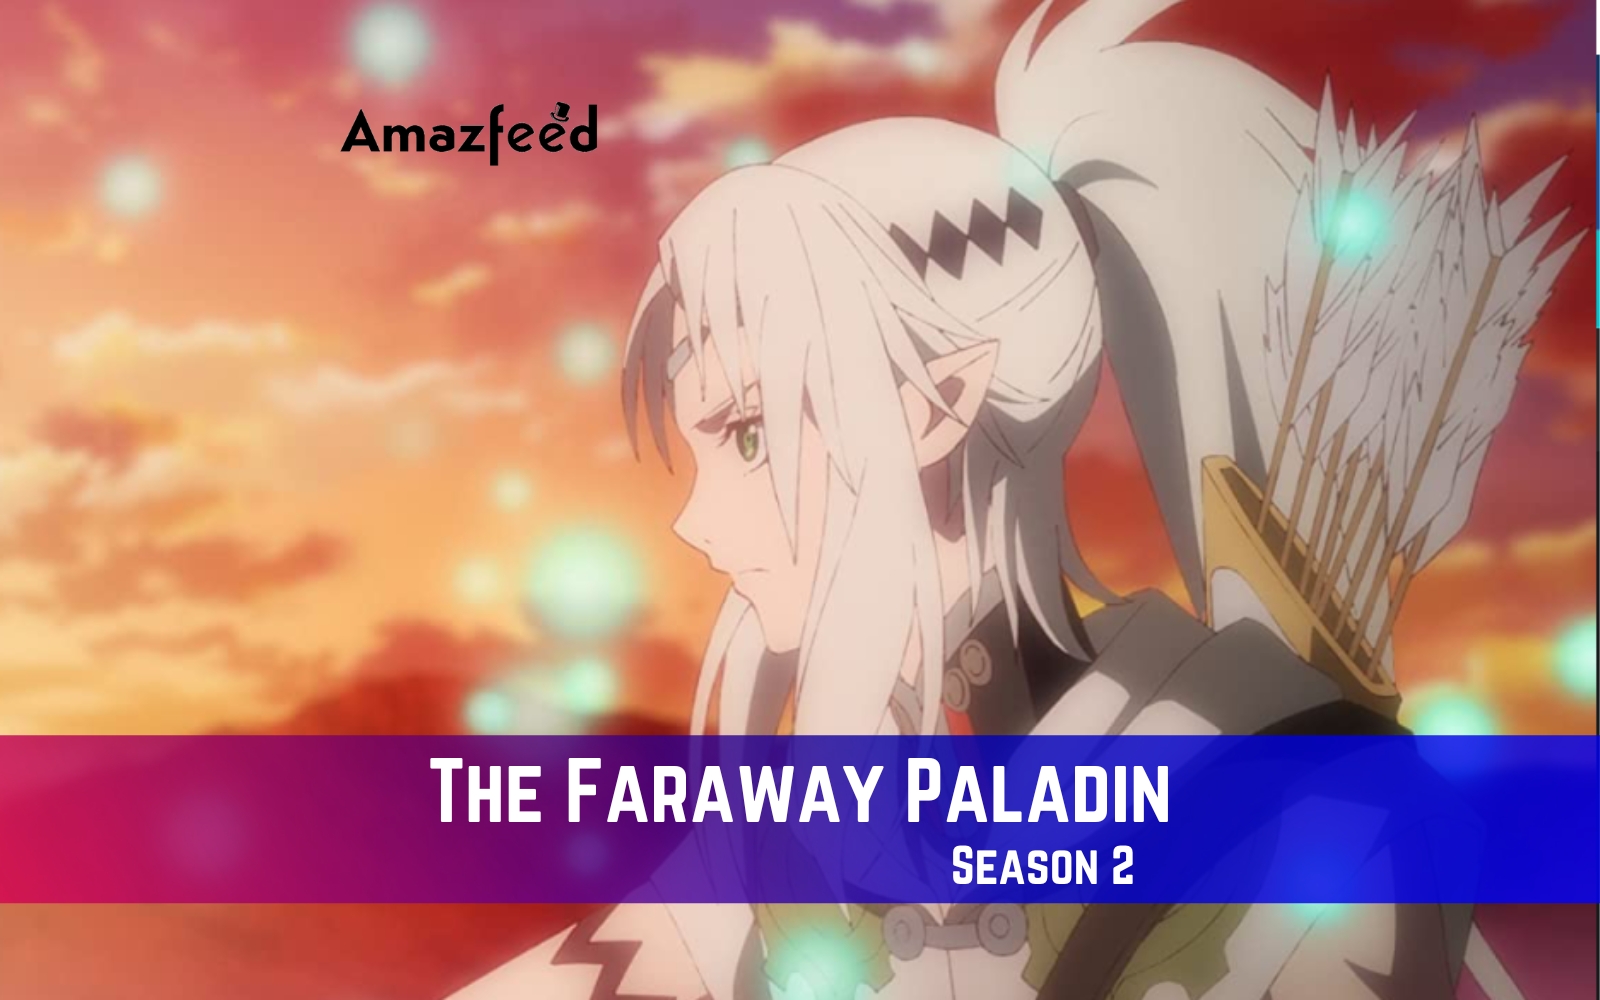 The Faraway Paladin AKA Saihate no Paladin season 2: Did The Show